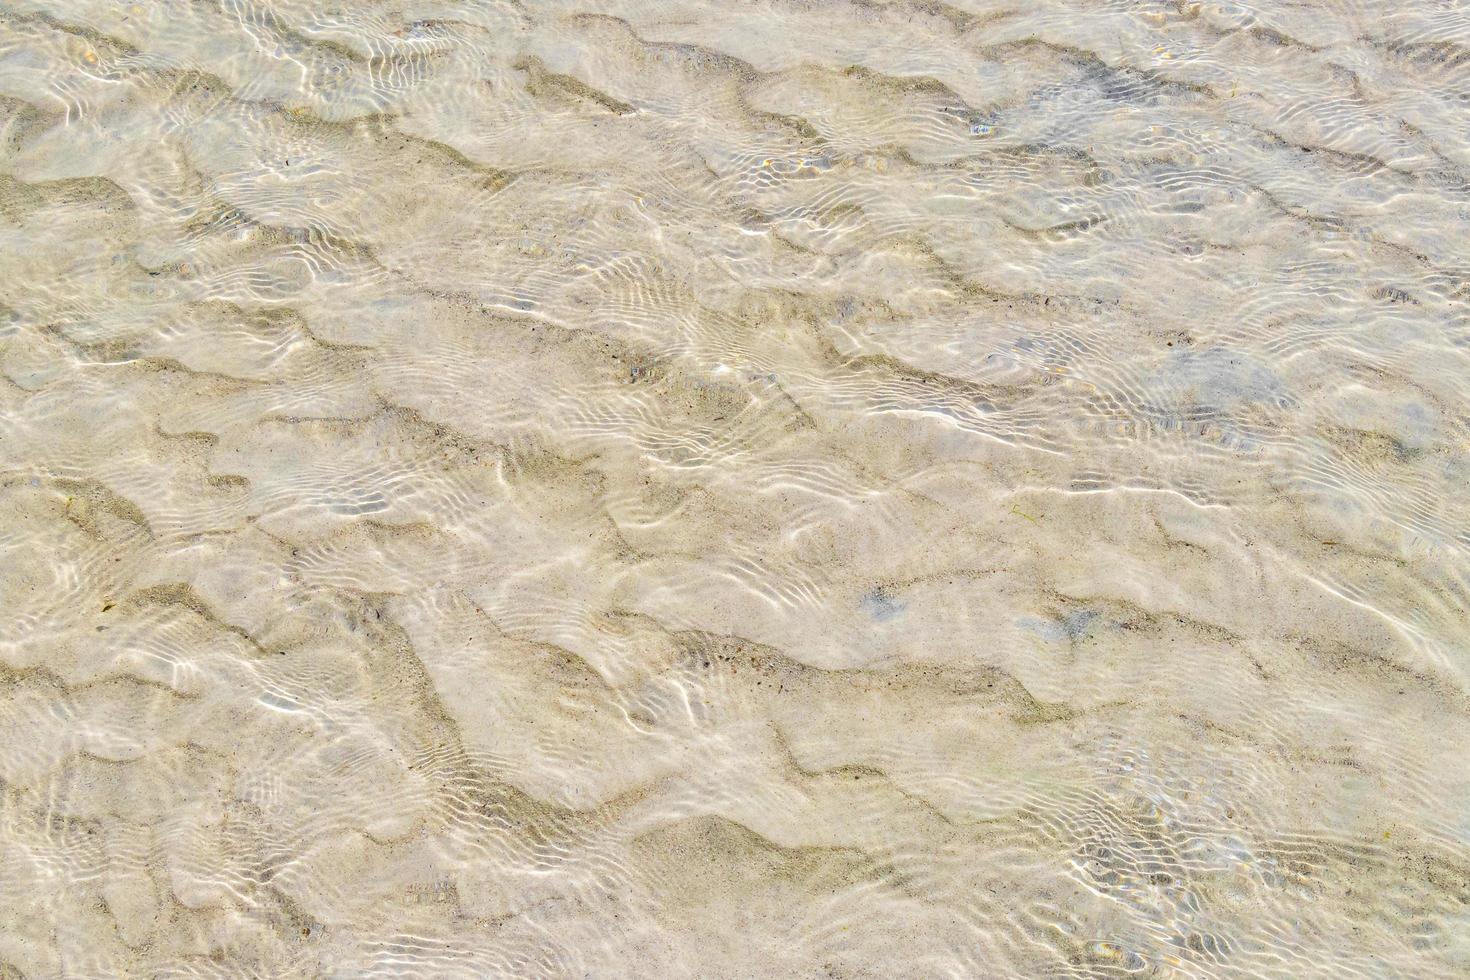 Clear water with sand Punta Esmeralda Playa del Carmen Mexico. photo